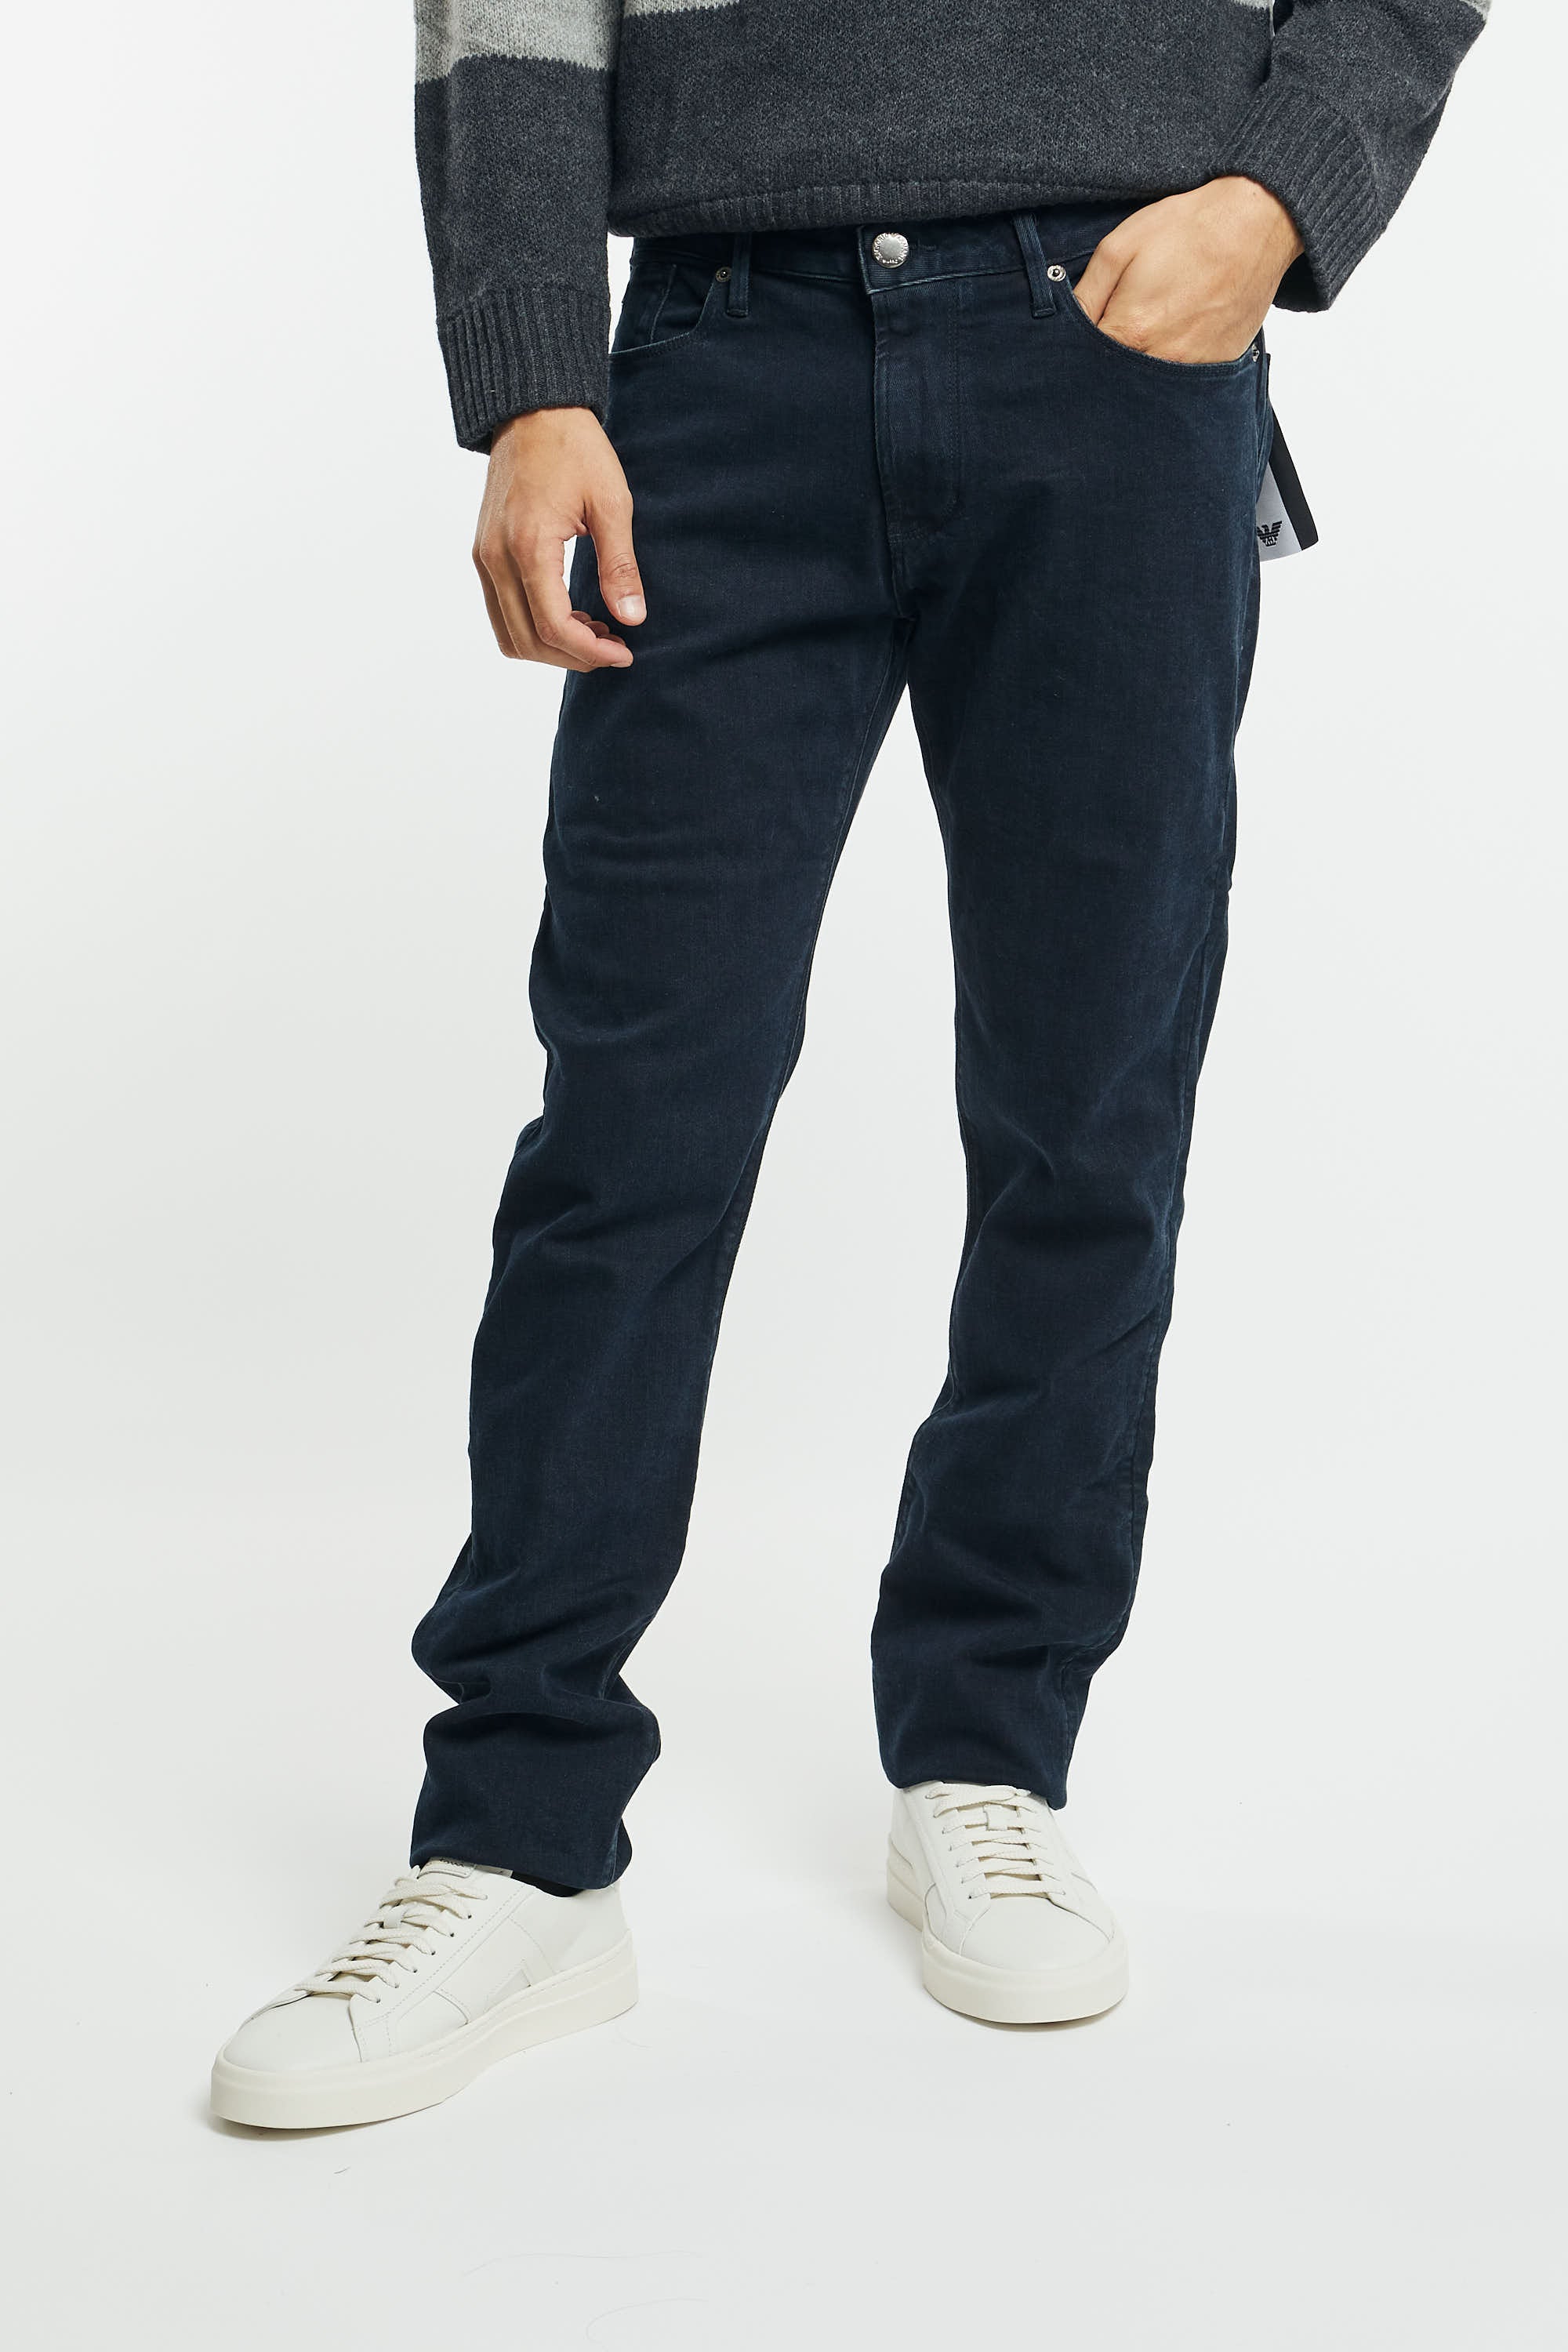 Emporio Armani Jeans J06 Slim Fit in Blue Stretch Cotton Denim-4